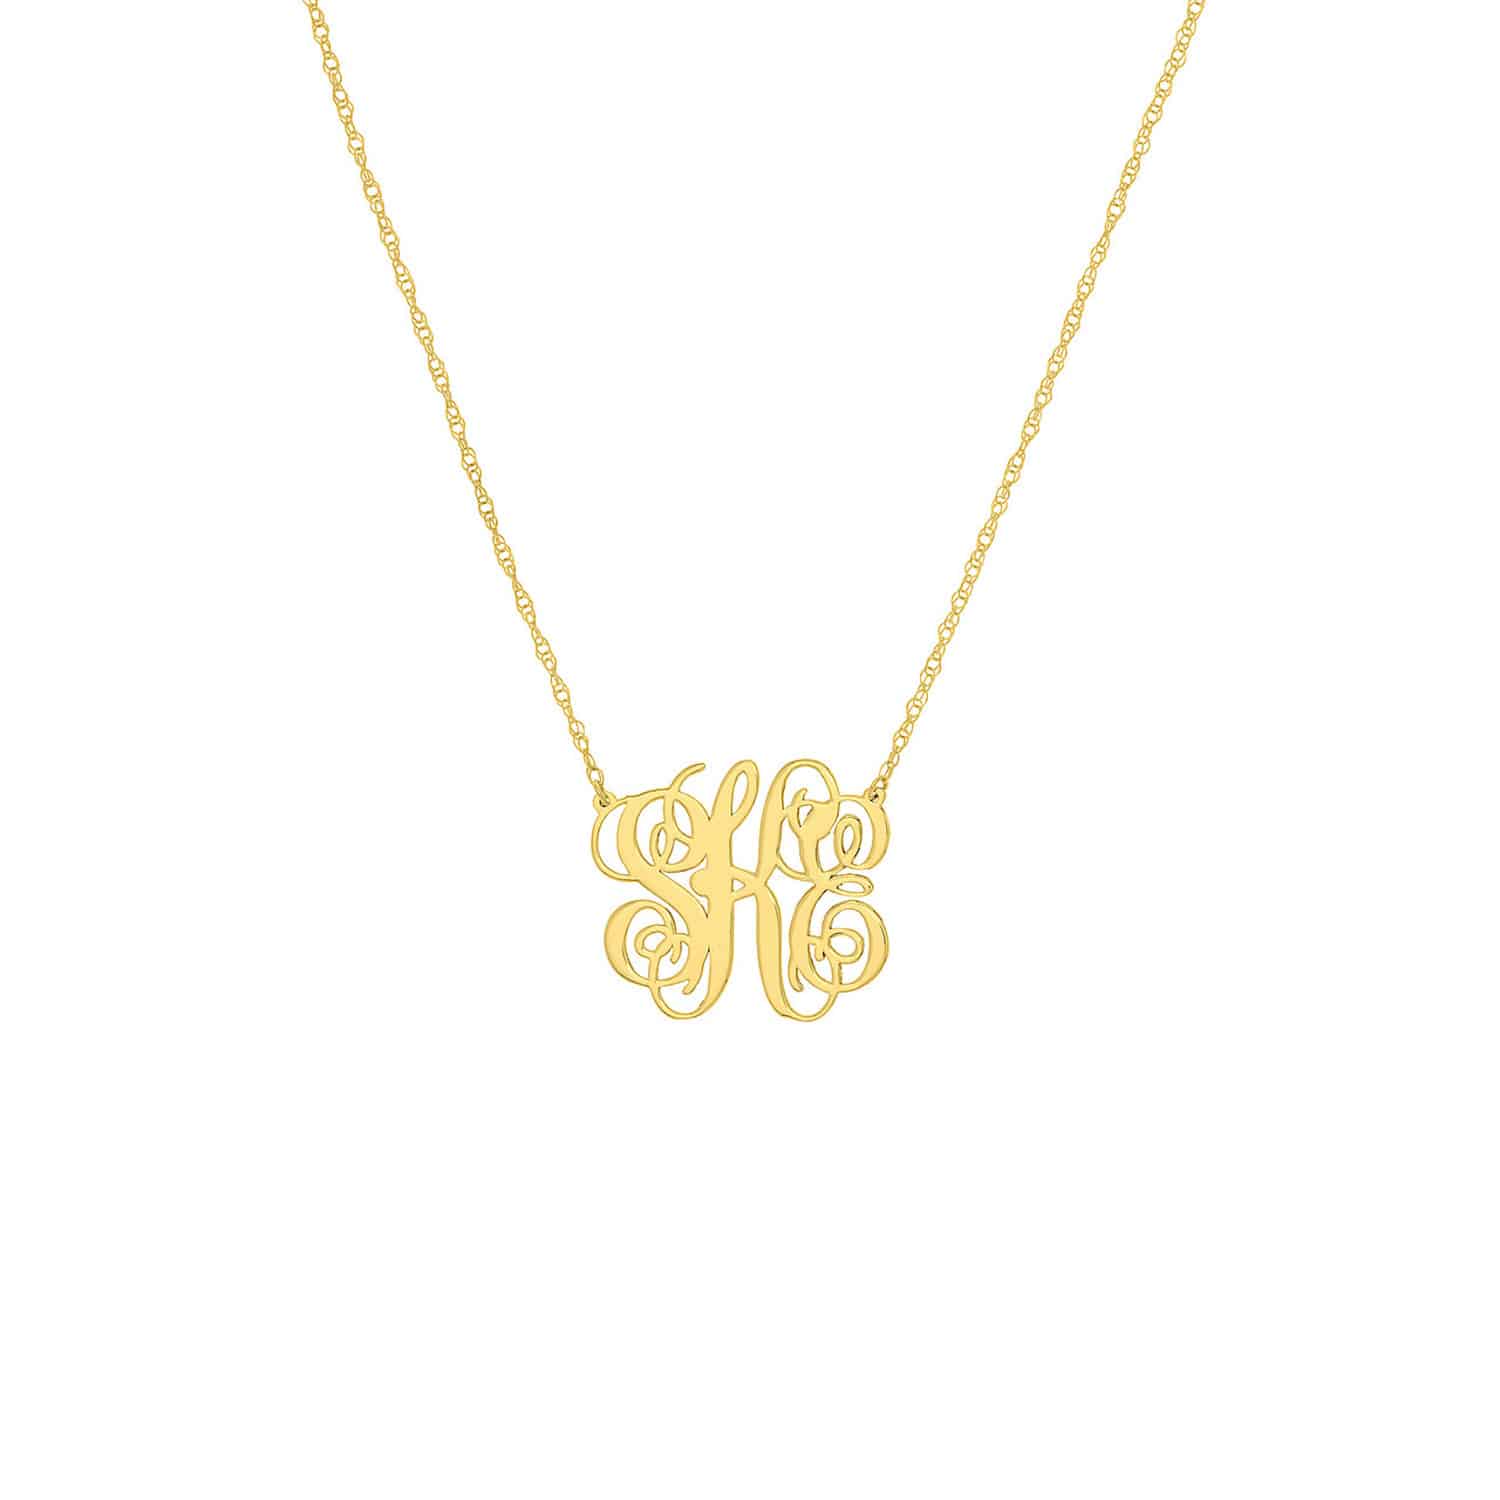 Personalized 14K Yellow Gold Script Monogram Nameplate Pendant Necklace - 14"-16" Adjustable